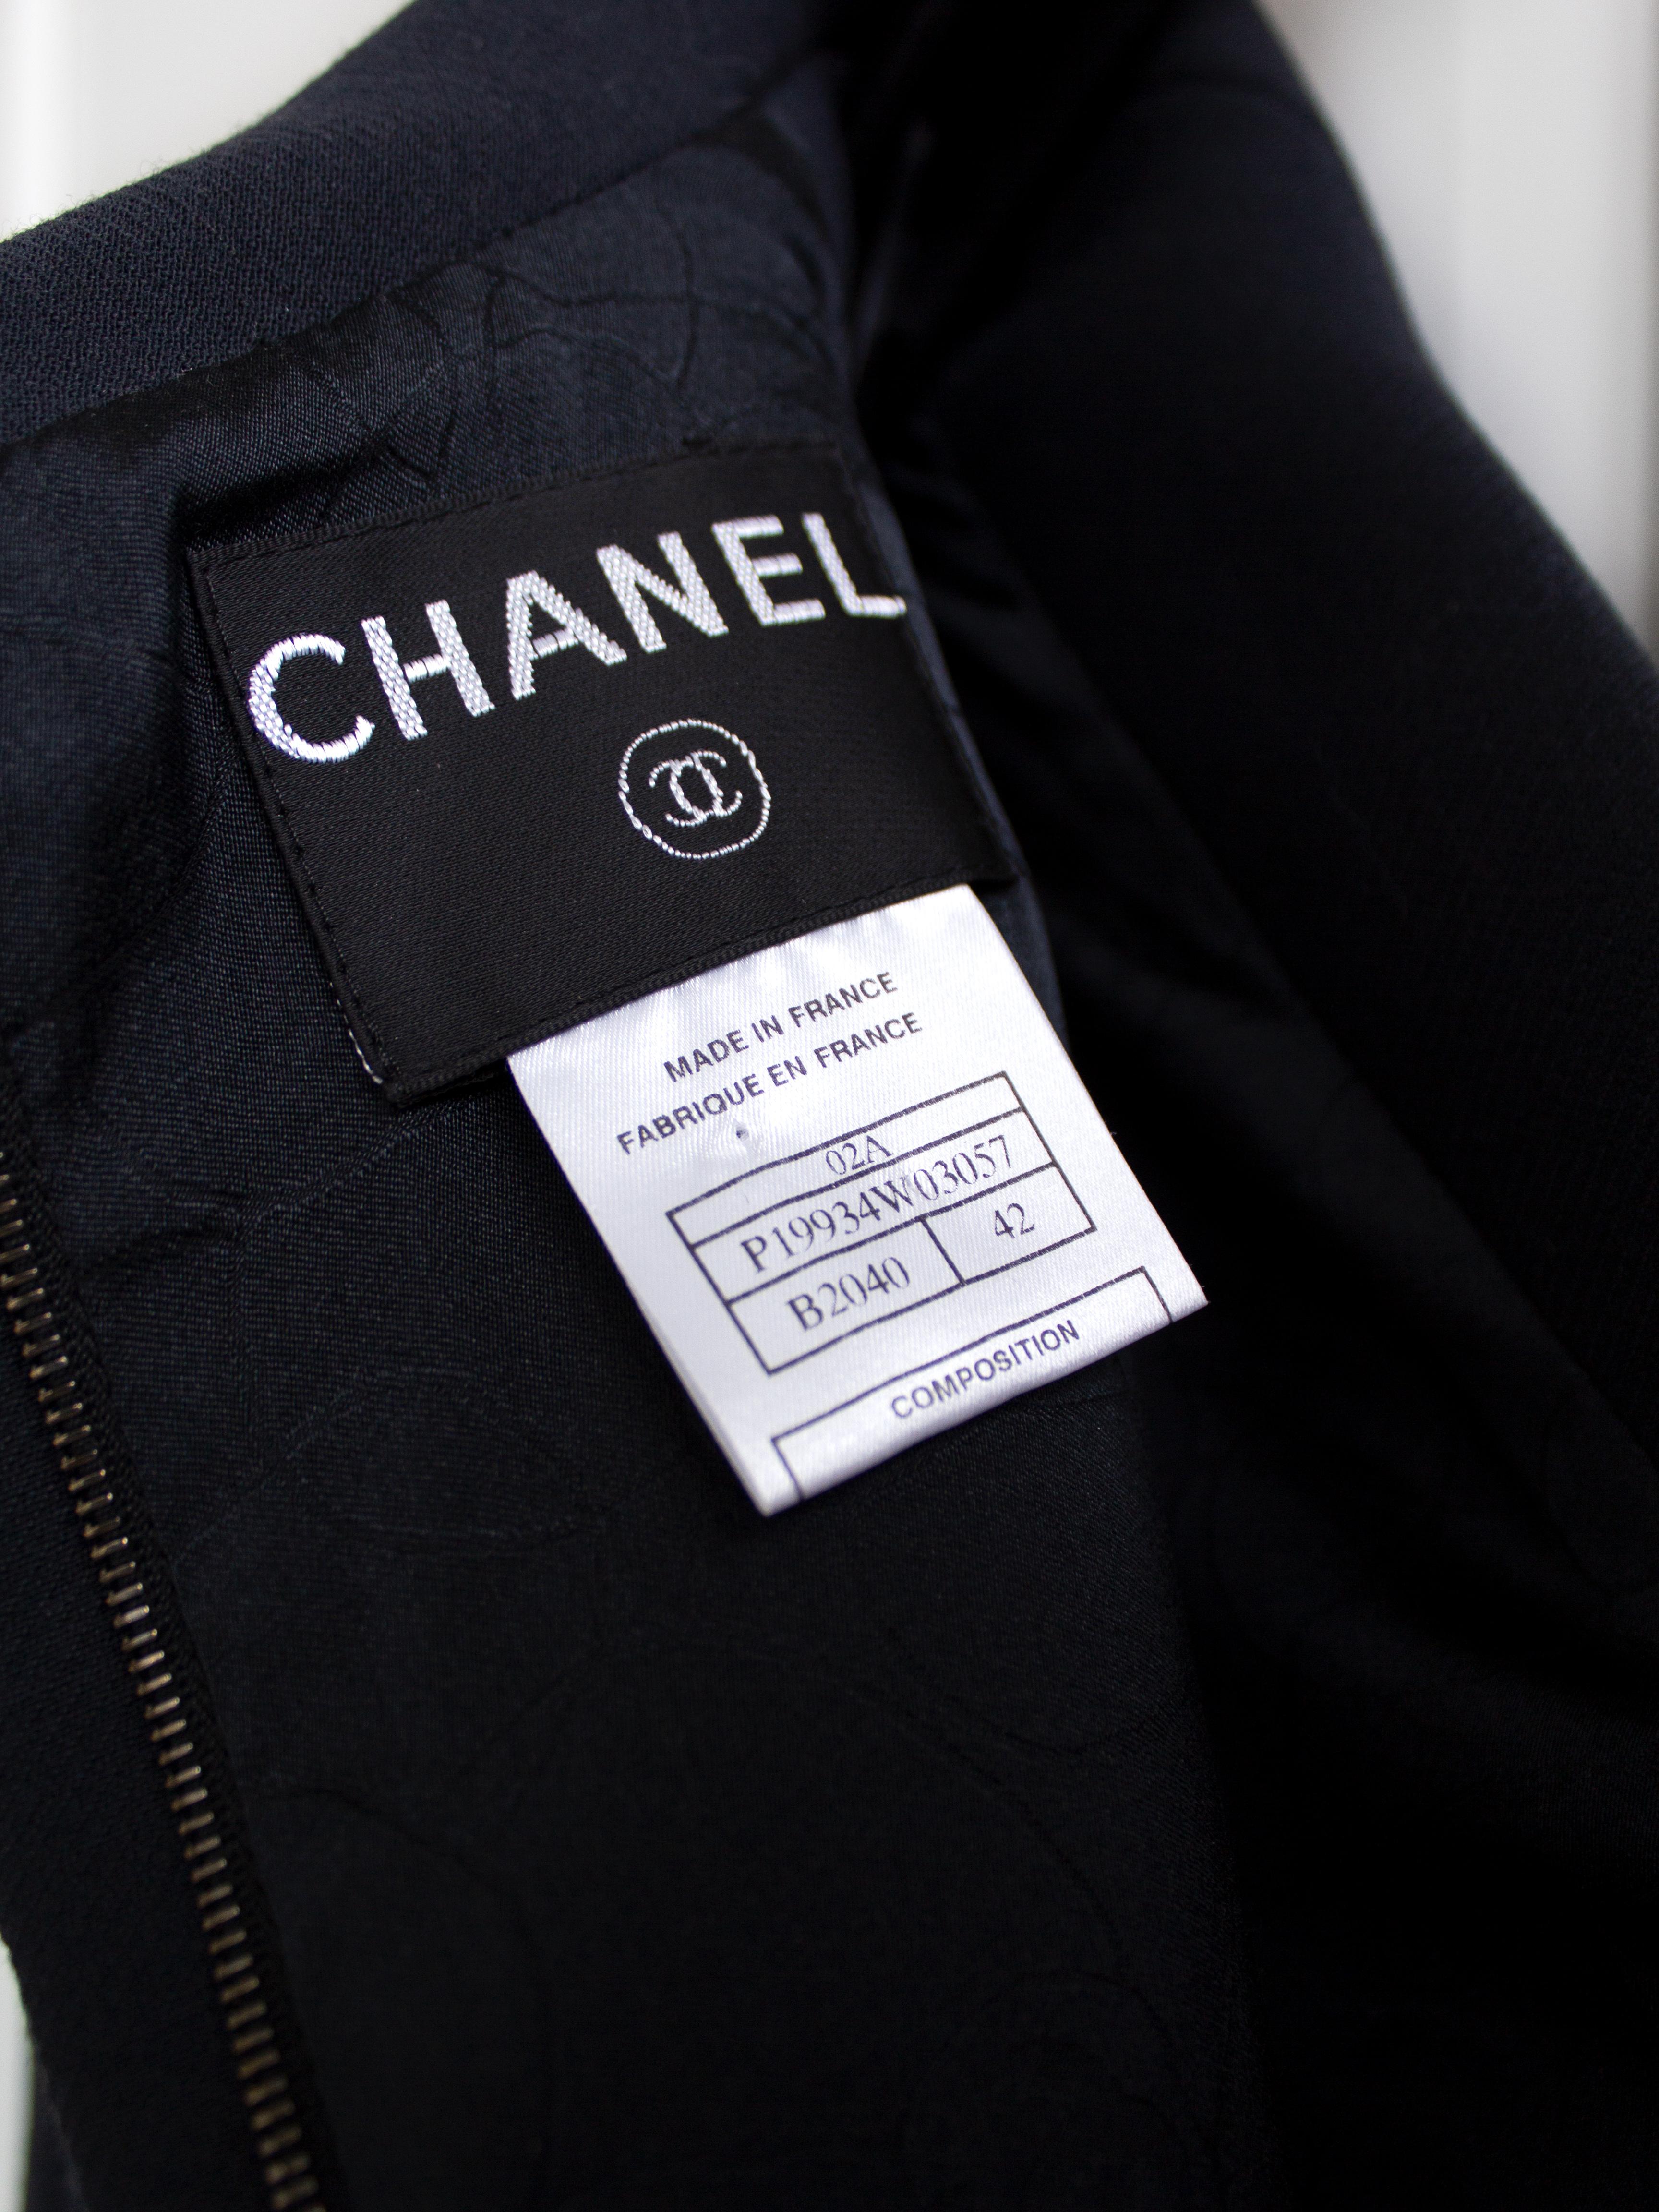 Chanel Vintage Fall 2002 Navy Blue Embellished Silver Crystal 02A Top Jacket For Sale 6